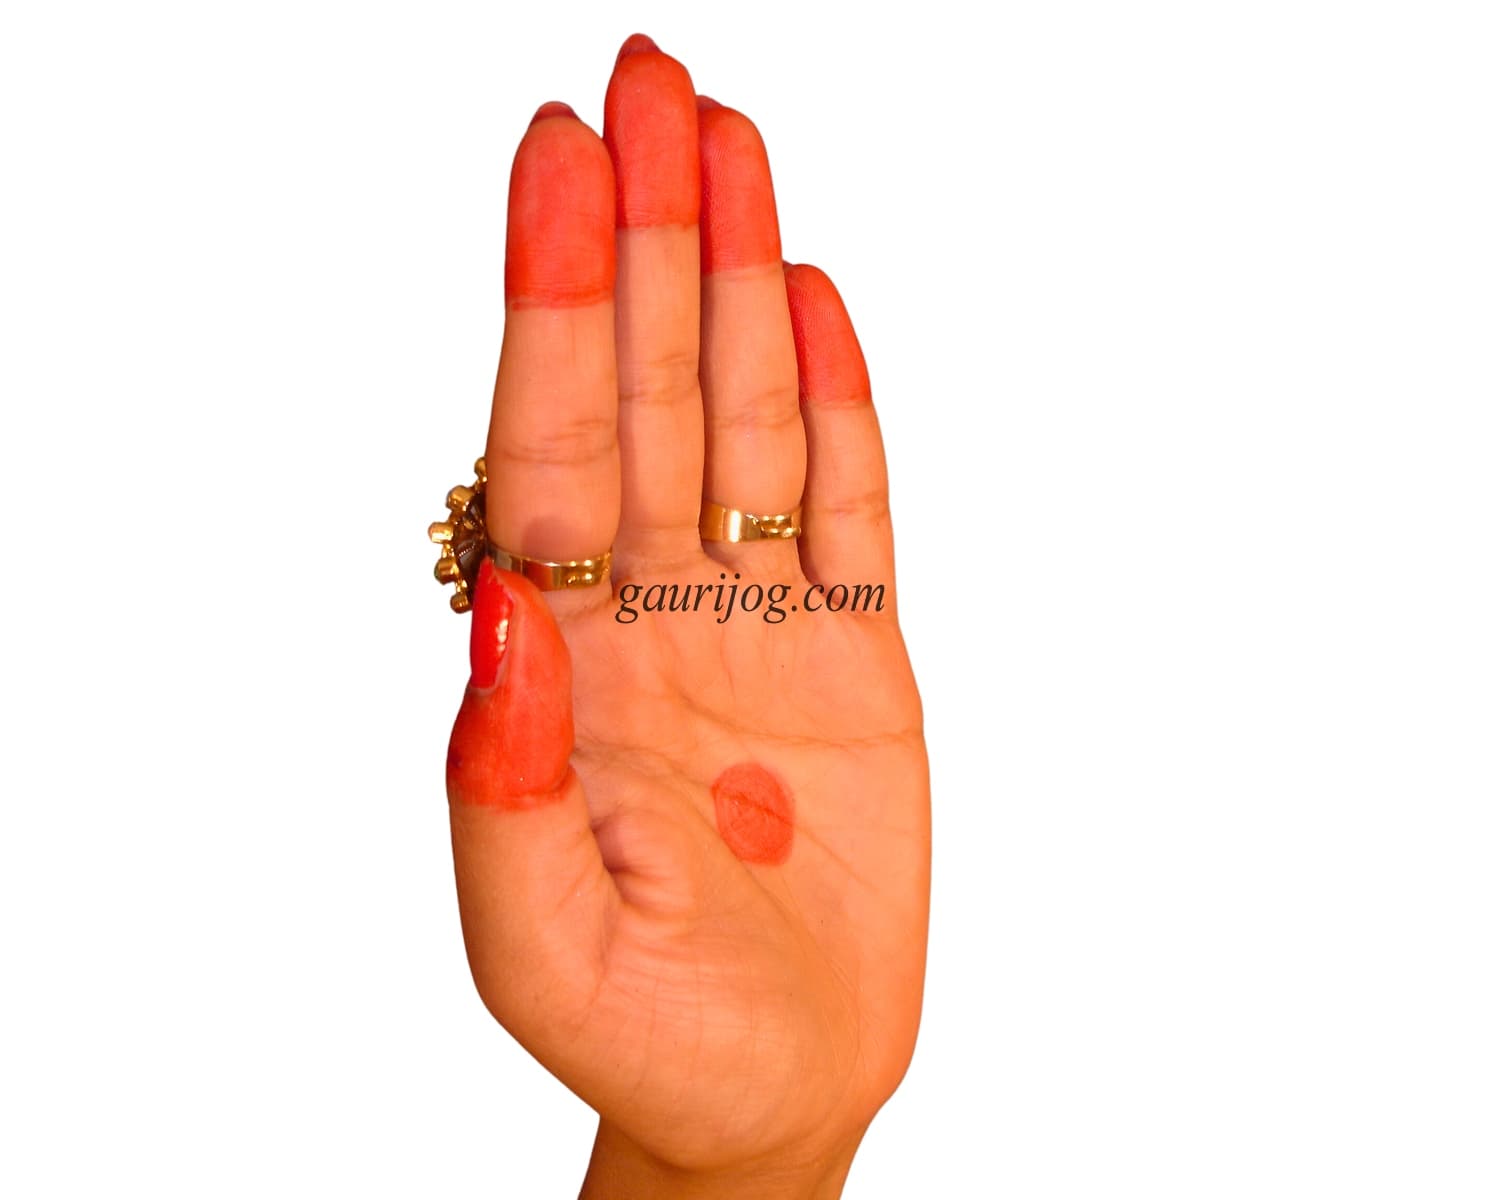 Pataka Hand Gesture by Gauri Jog